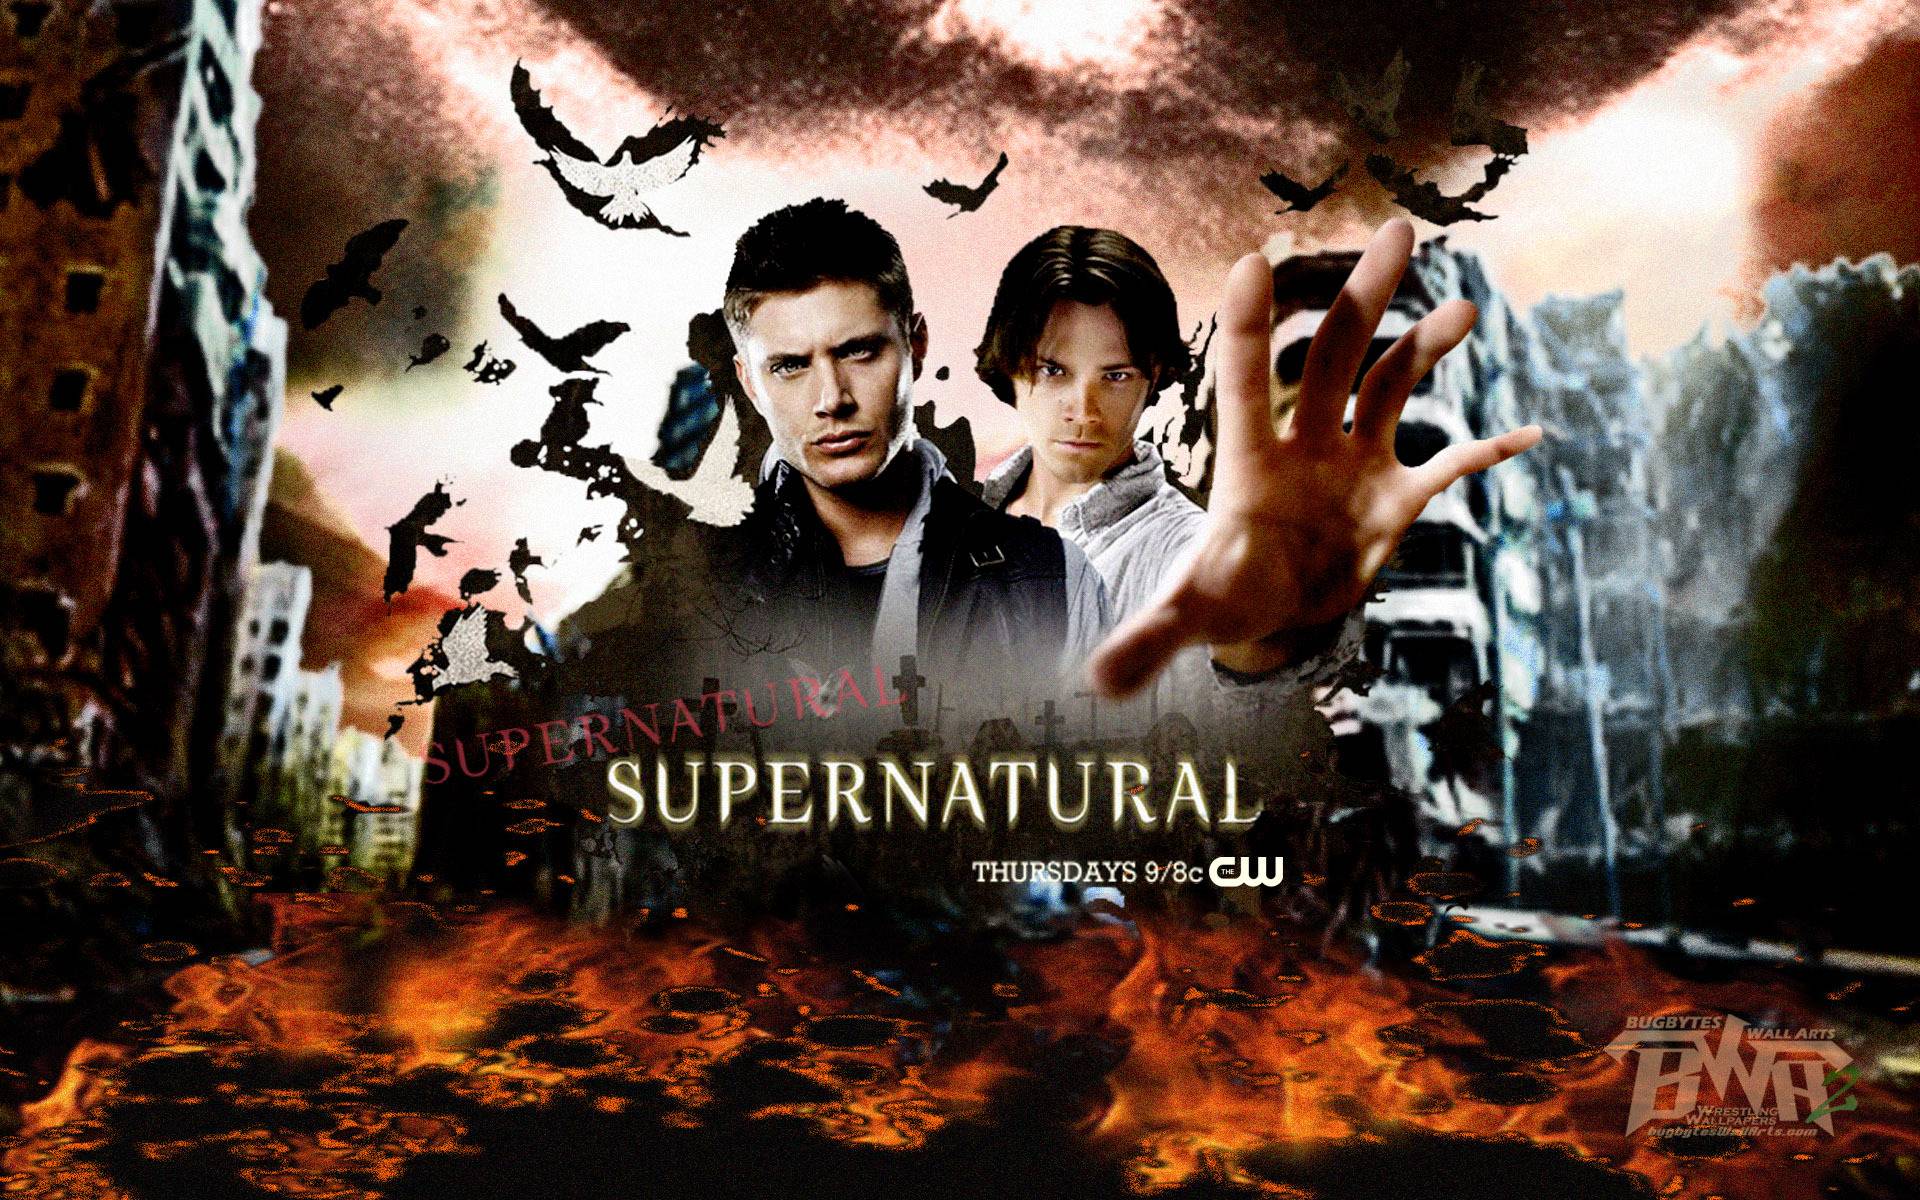 Supernatural Wallpapers Poster Tv Show